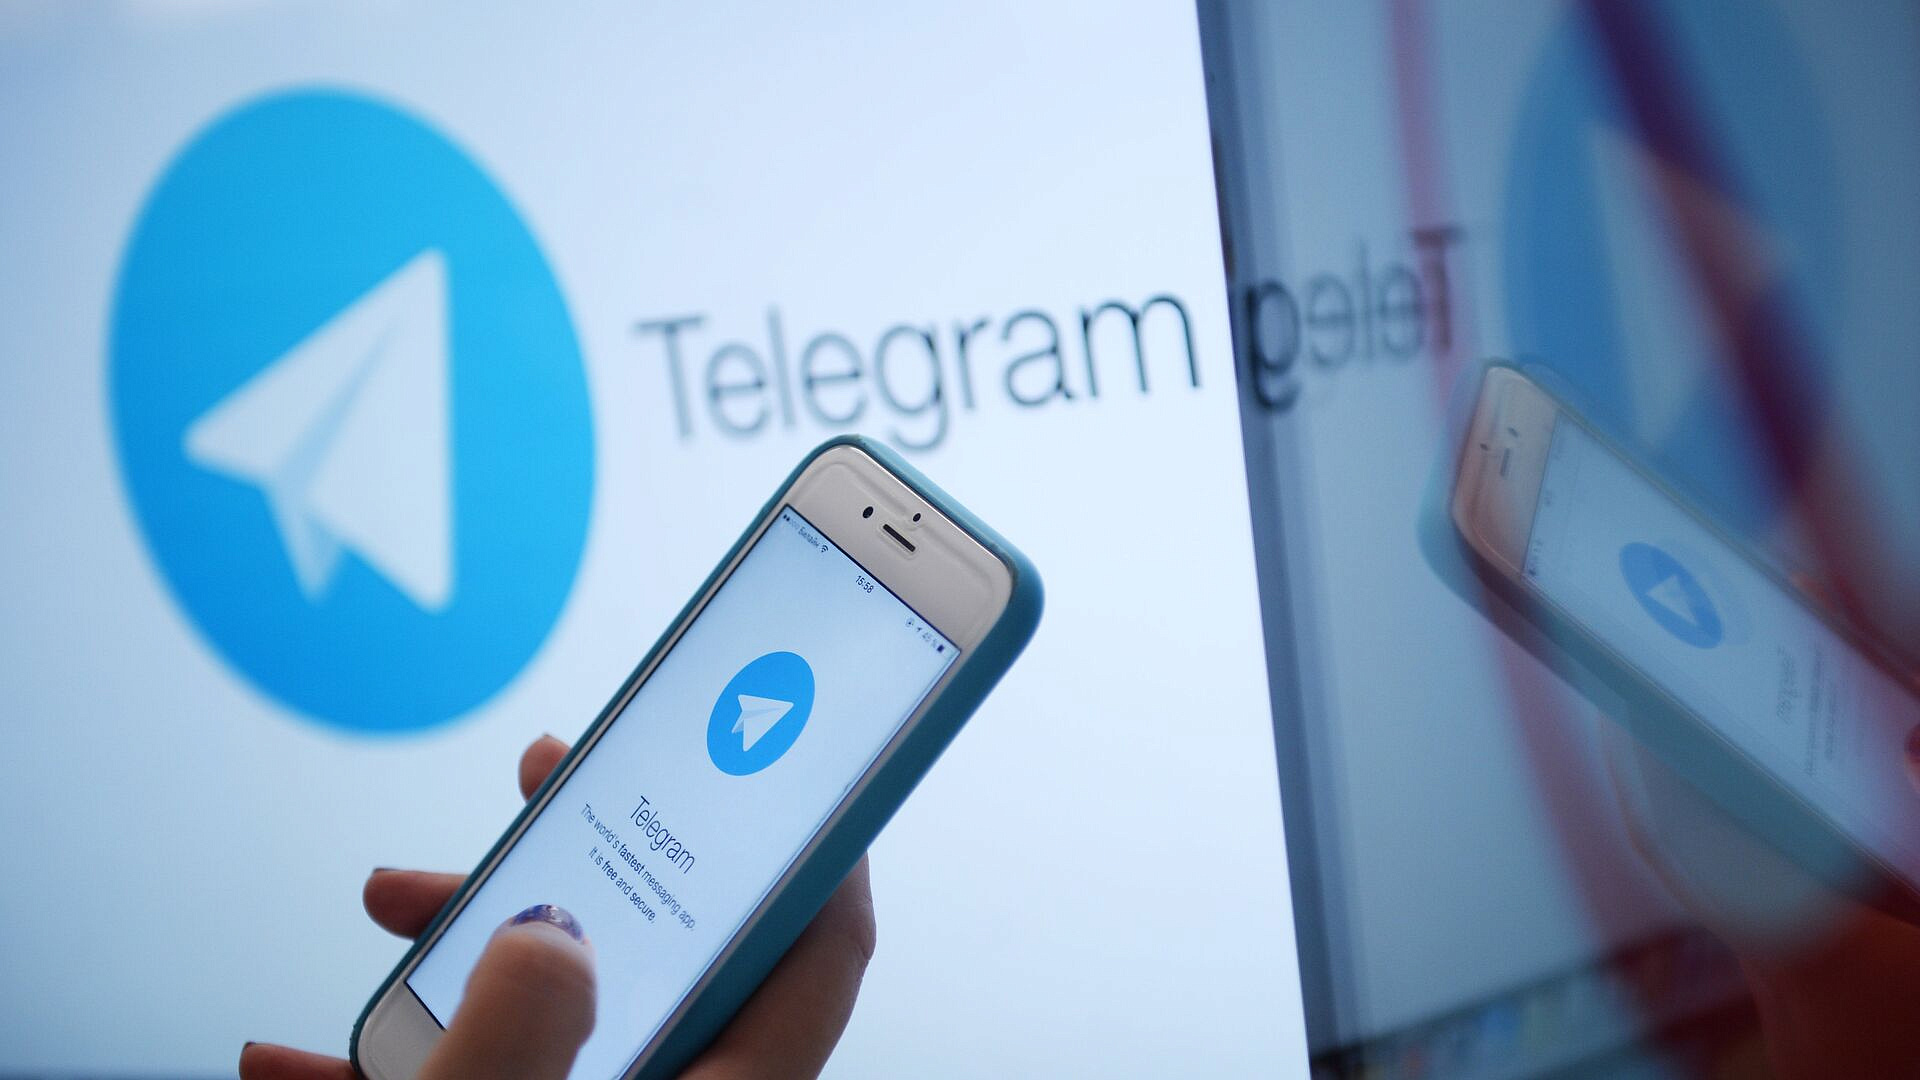      Telegram-   